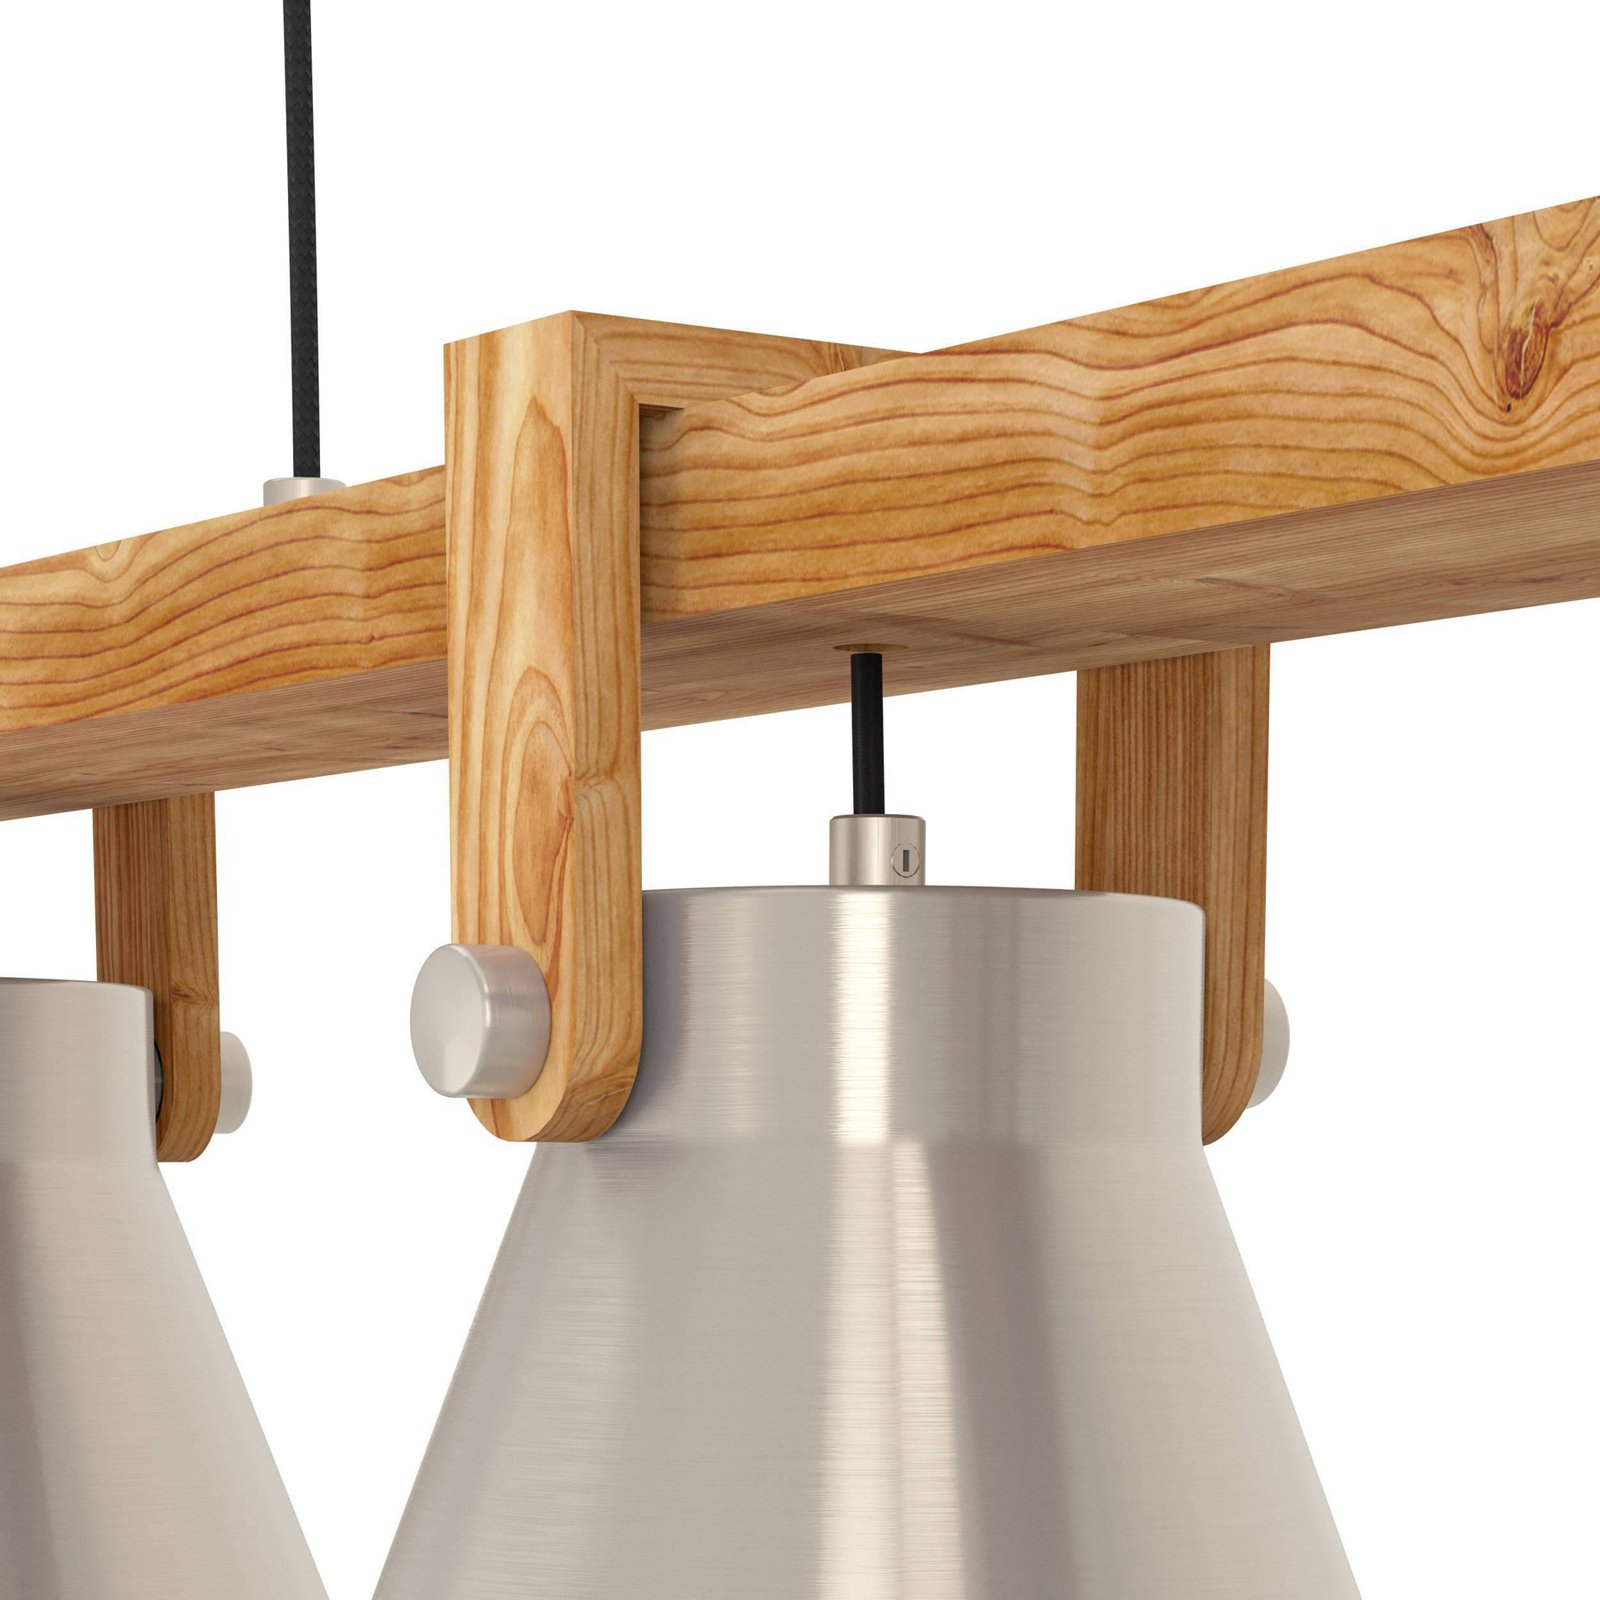 Cawton hanging light, length 76 cm, steel/brown, 3-bulb, steel